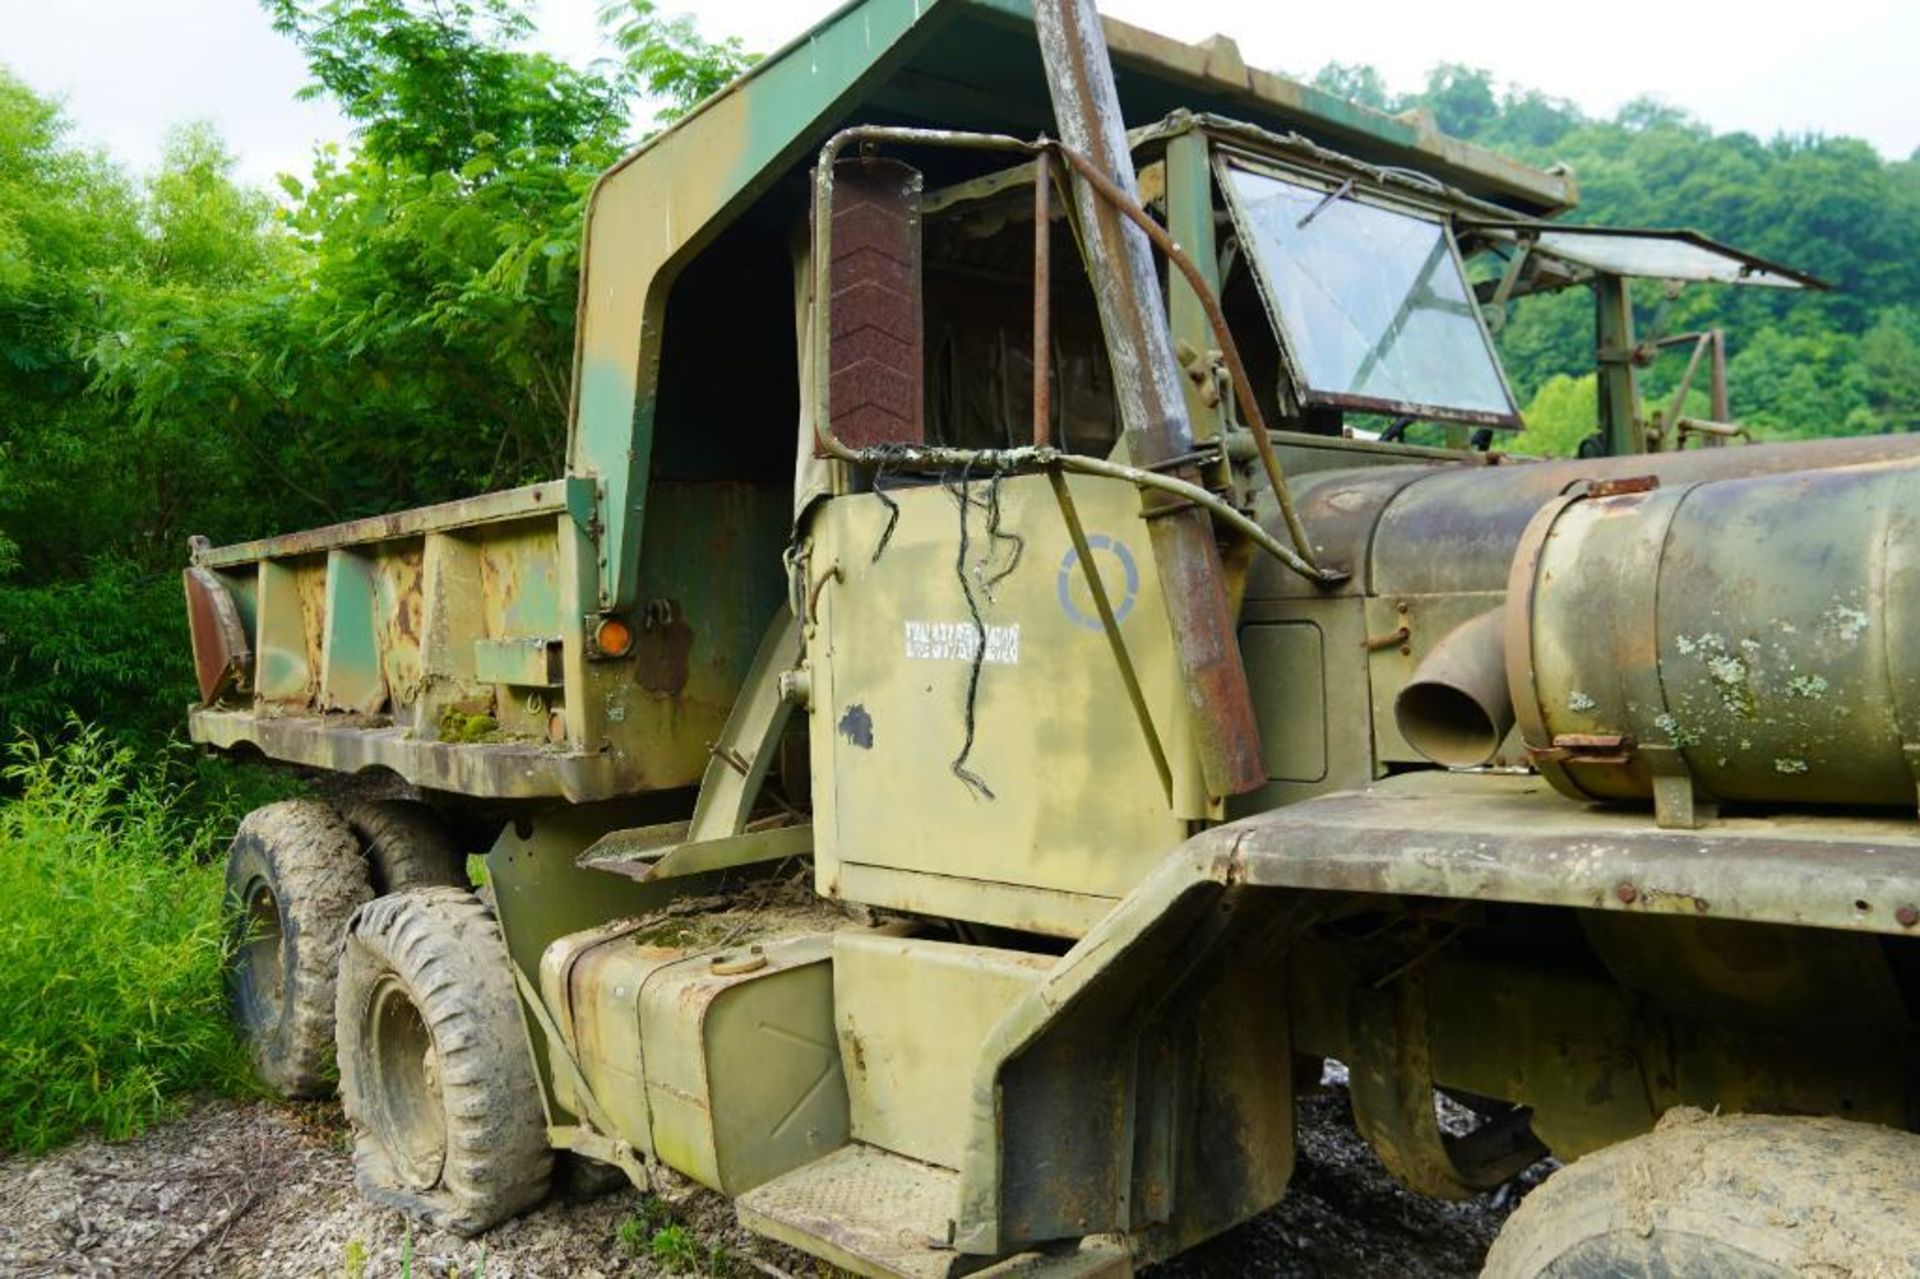 Military 6 x 6 Dump Truck - Image 9 of 50